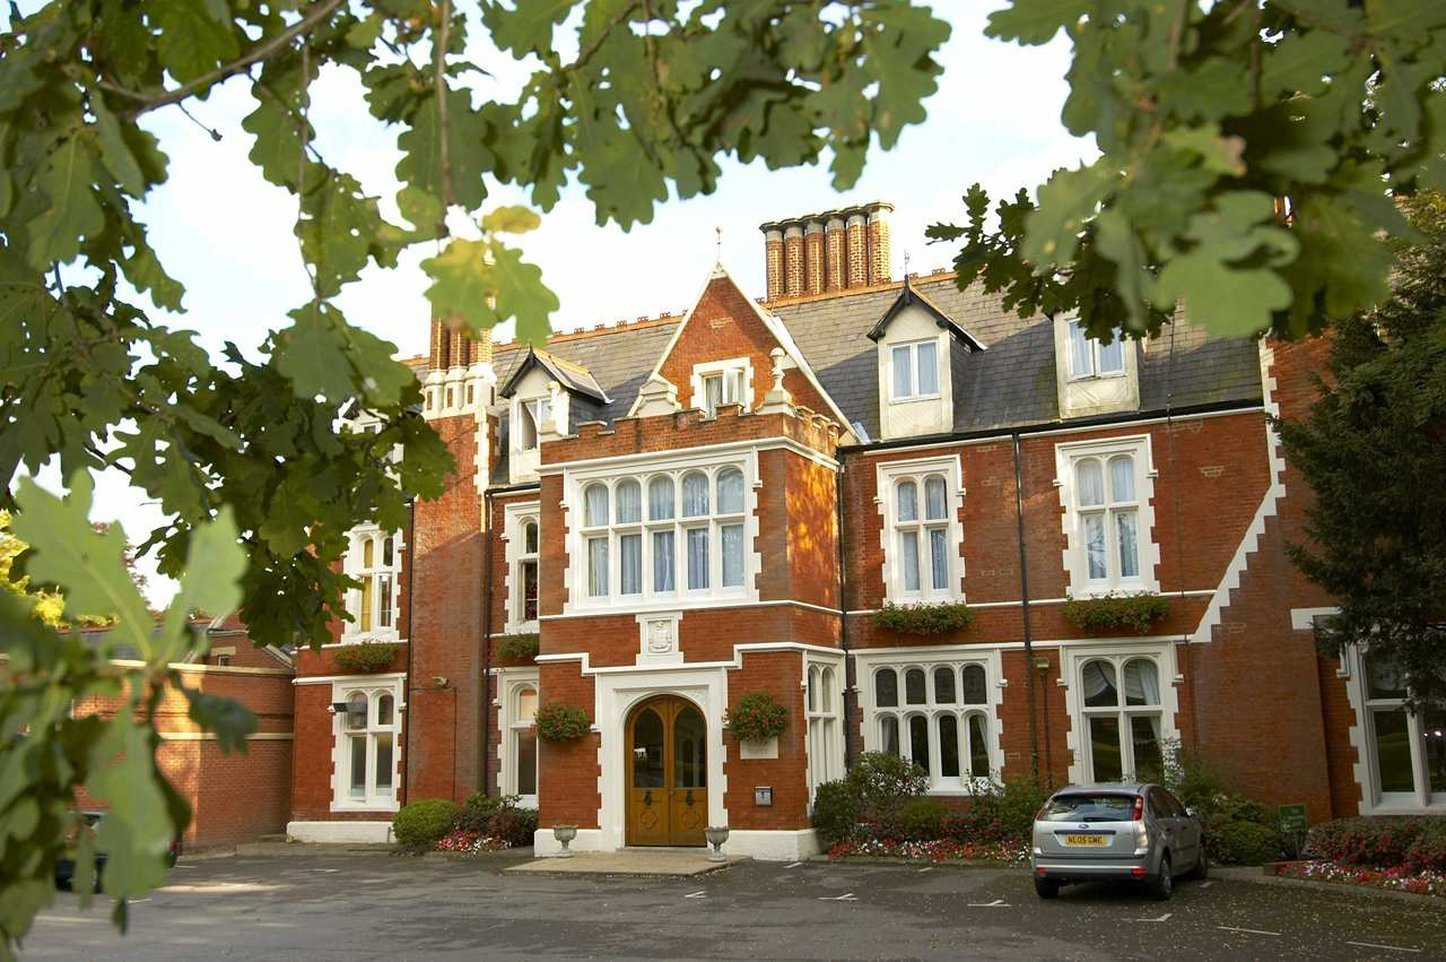 Photo of Hilton St. Anne's Manor, Bracknell, Bracknell, England, United Kingdom